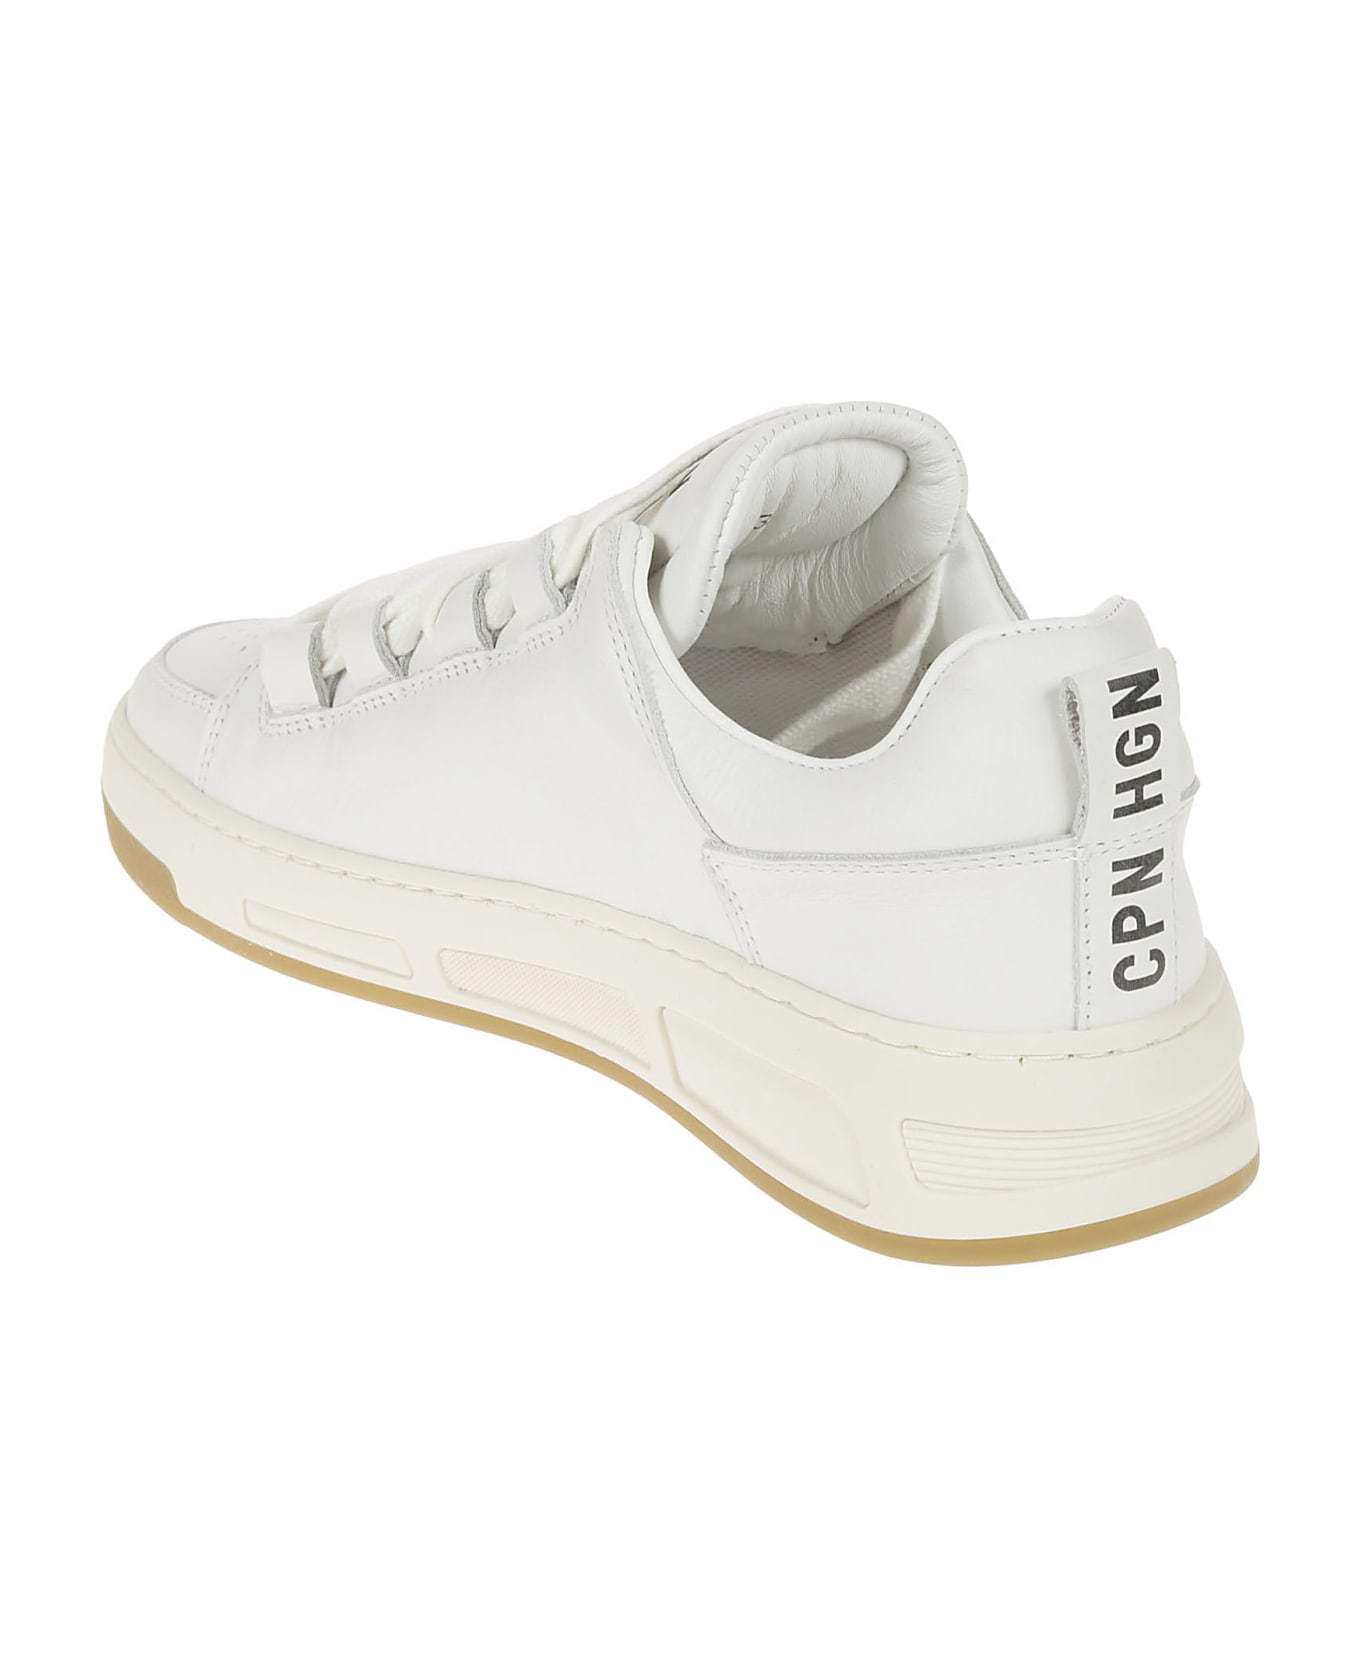 Copenhagen Leather Sneaker - White